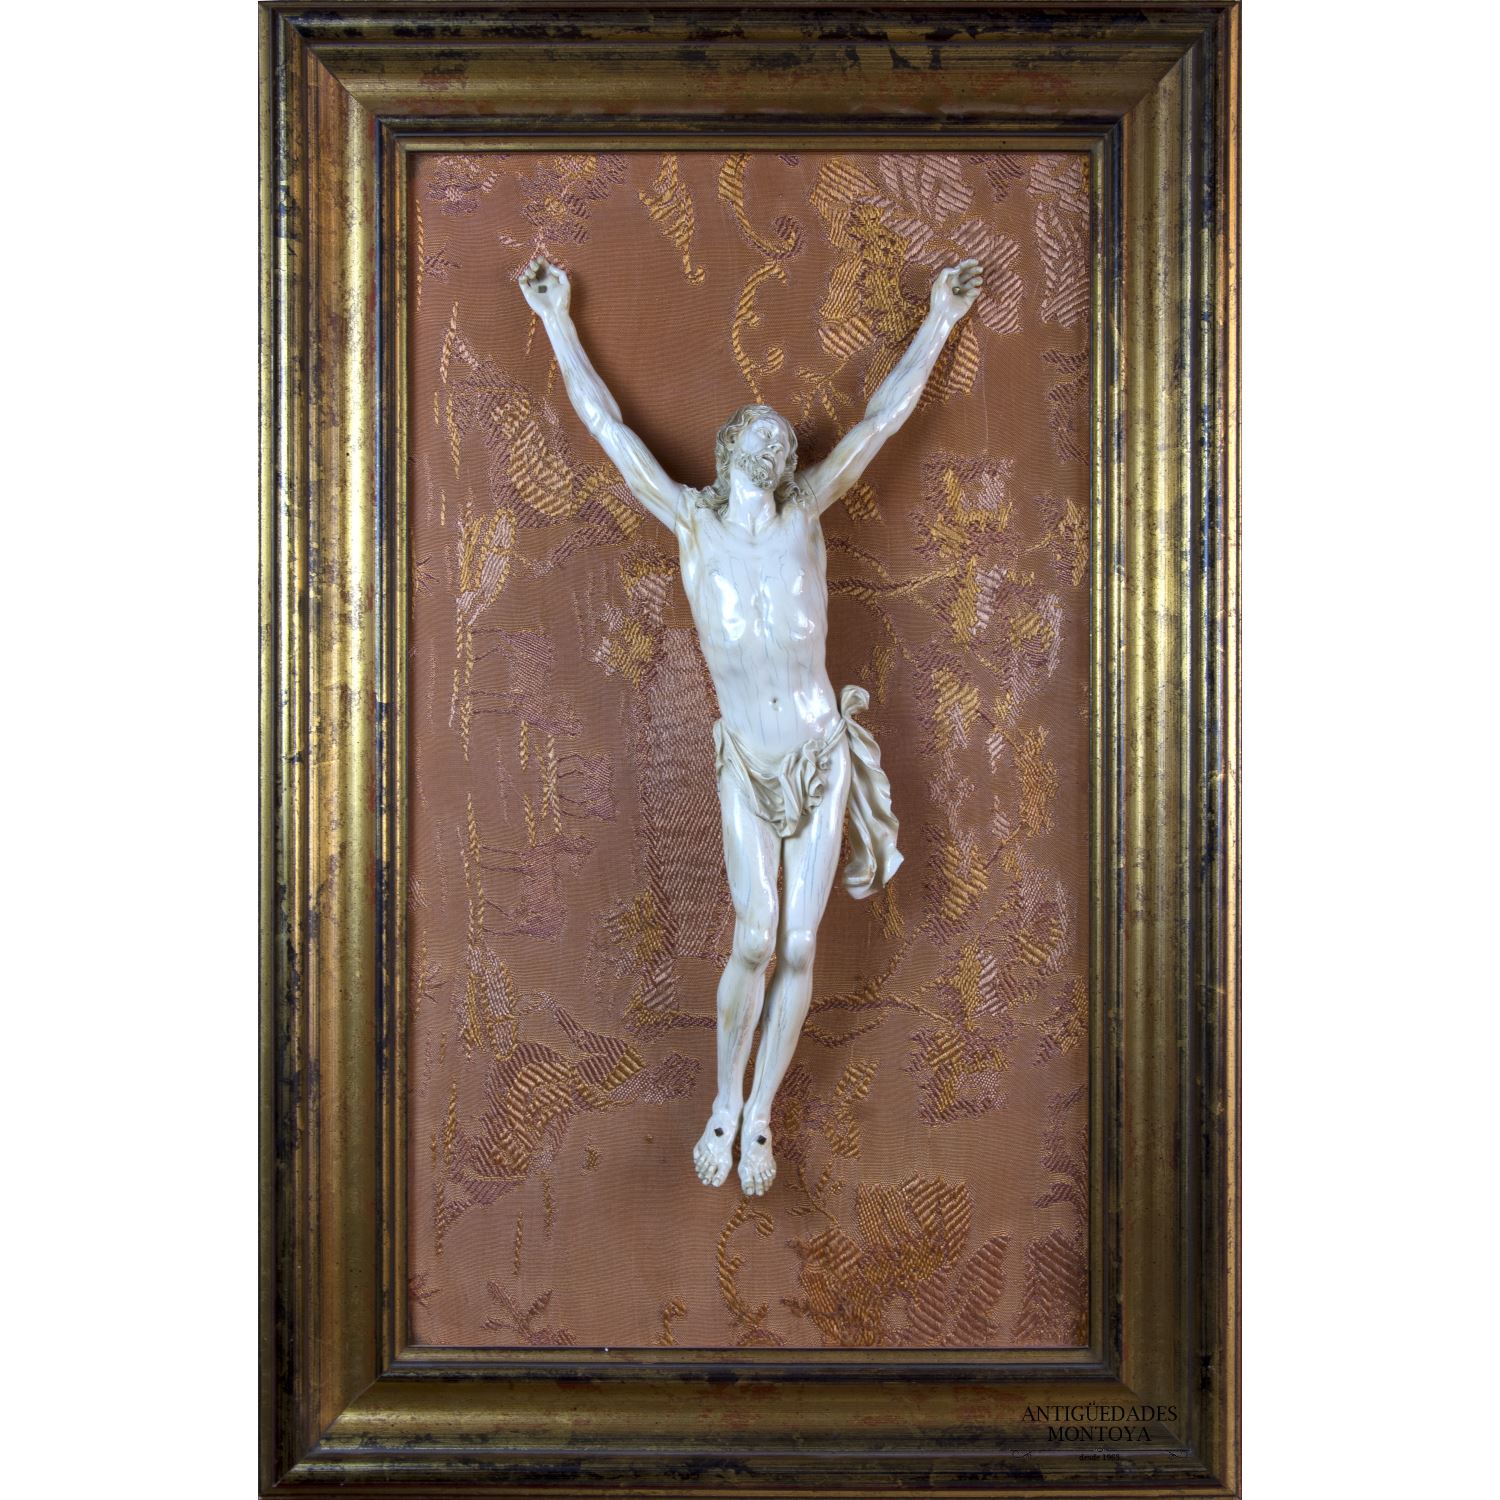 Ivory Christ 18th century